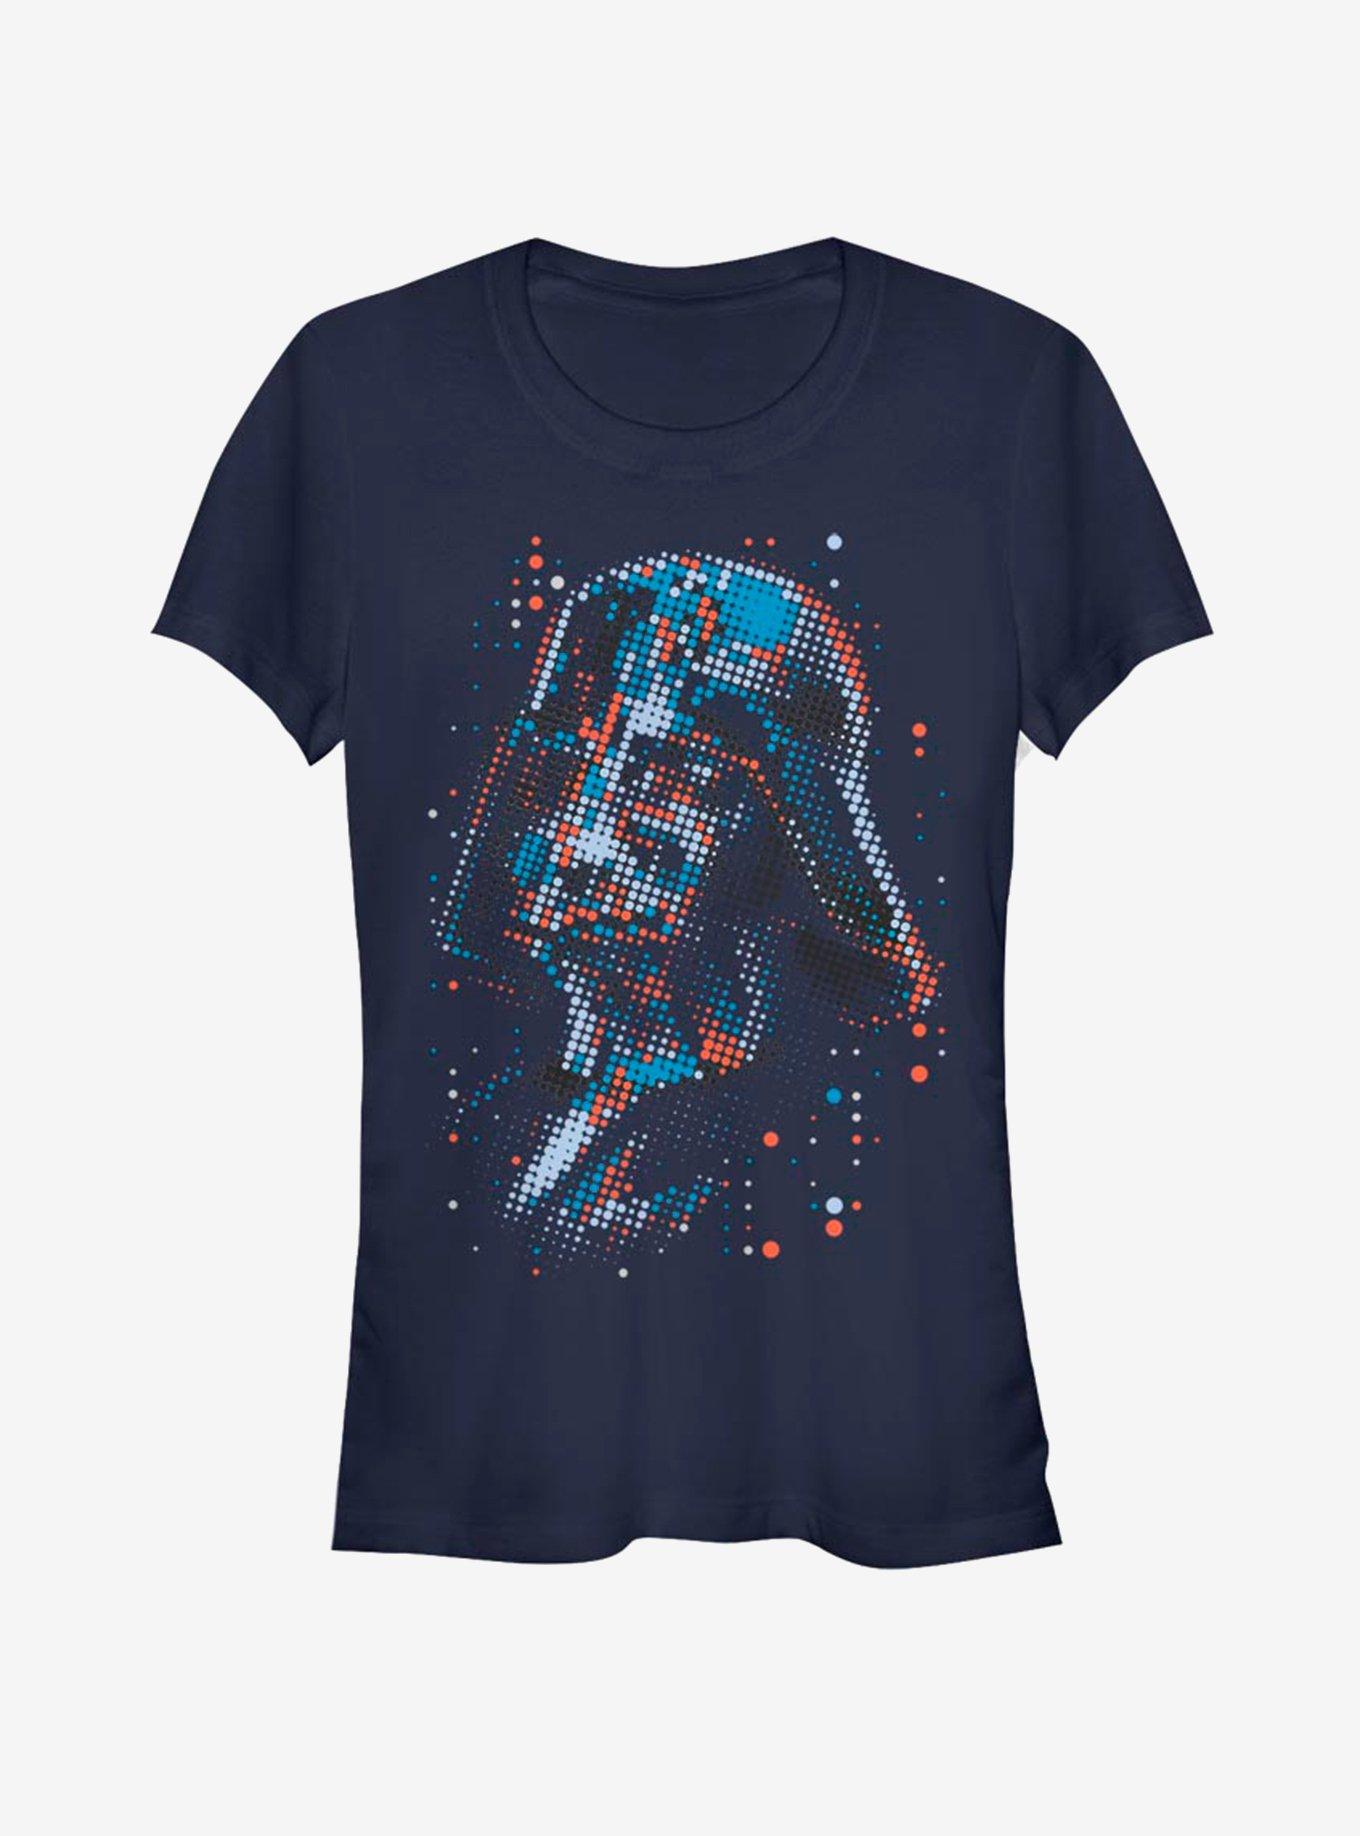 Star Wars Poster Girls T-Shirt